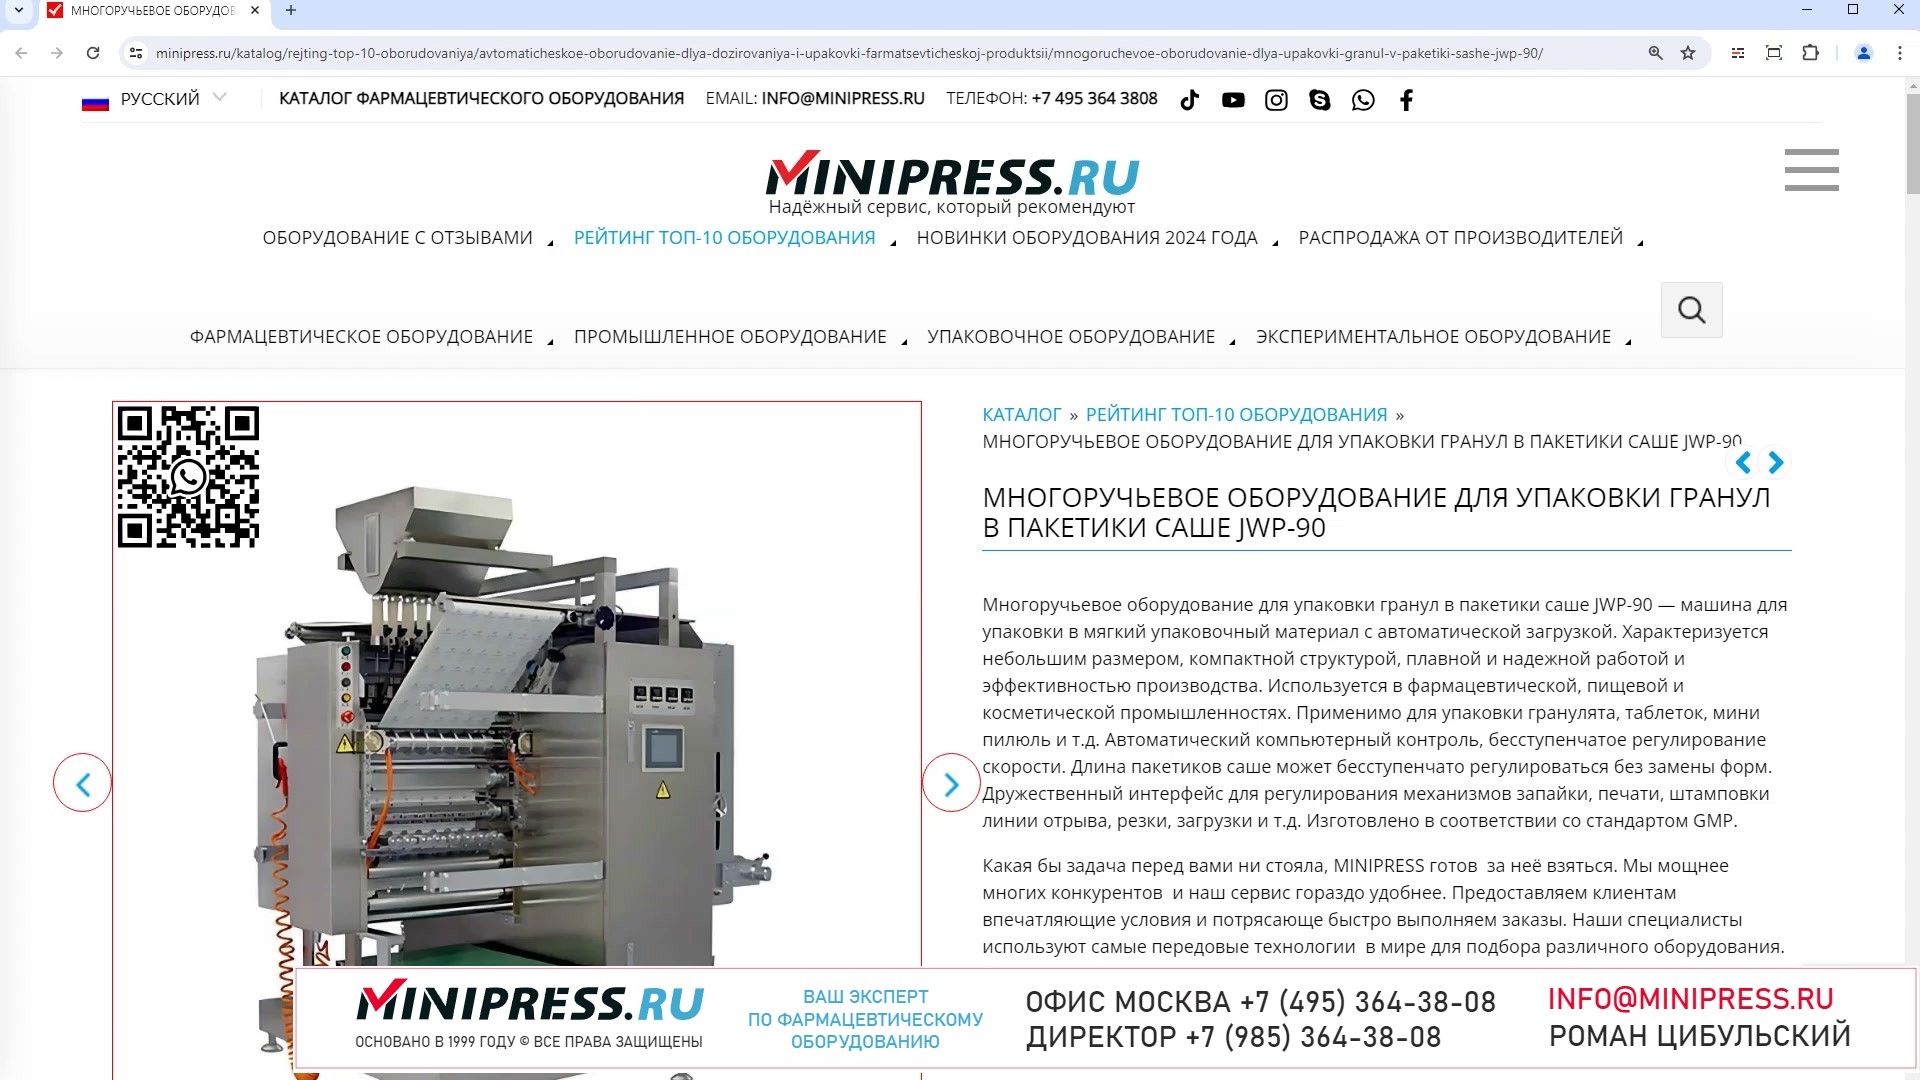 Minipress.ru Многоручьевое оборудование для упаковки гранул в пакетики саше JWP-90